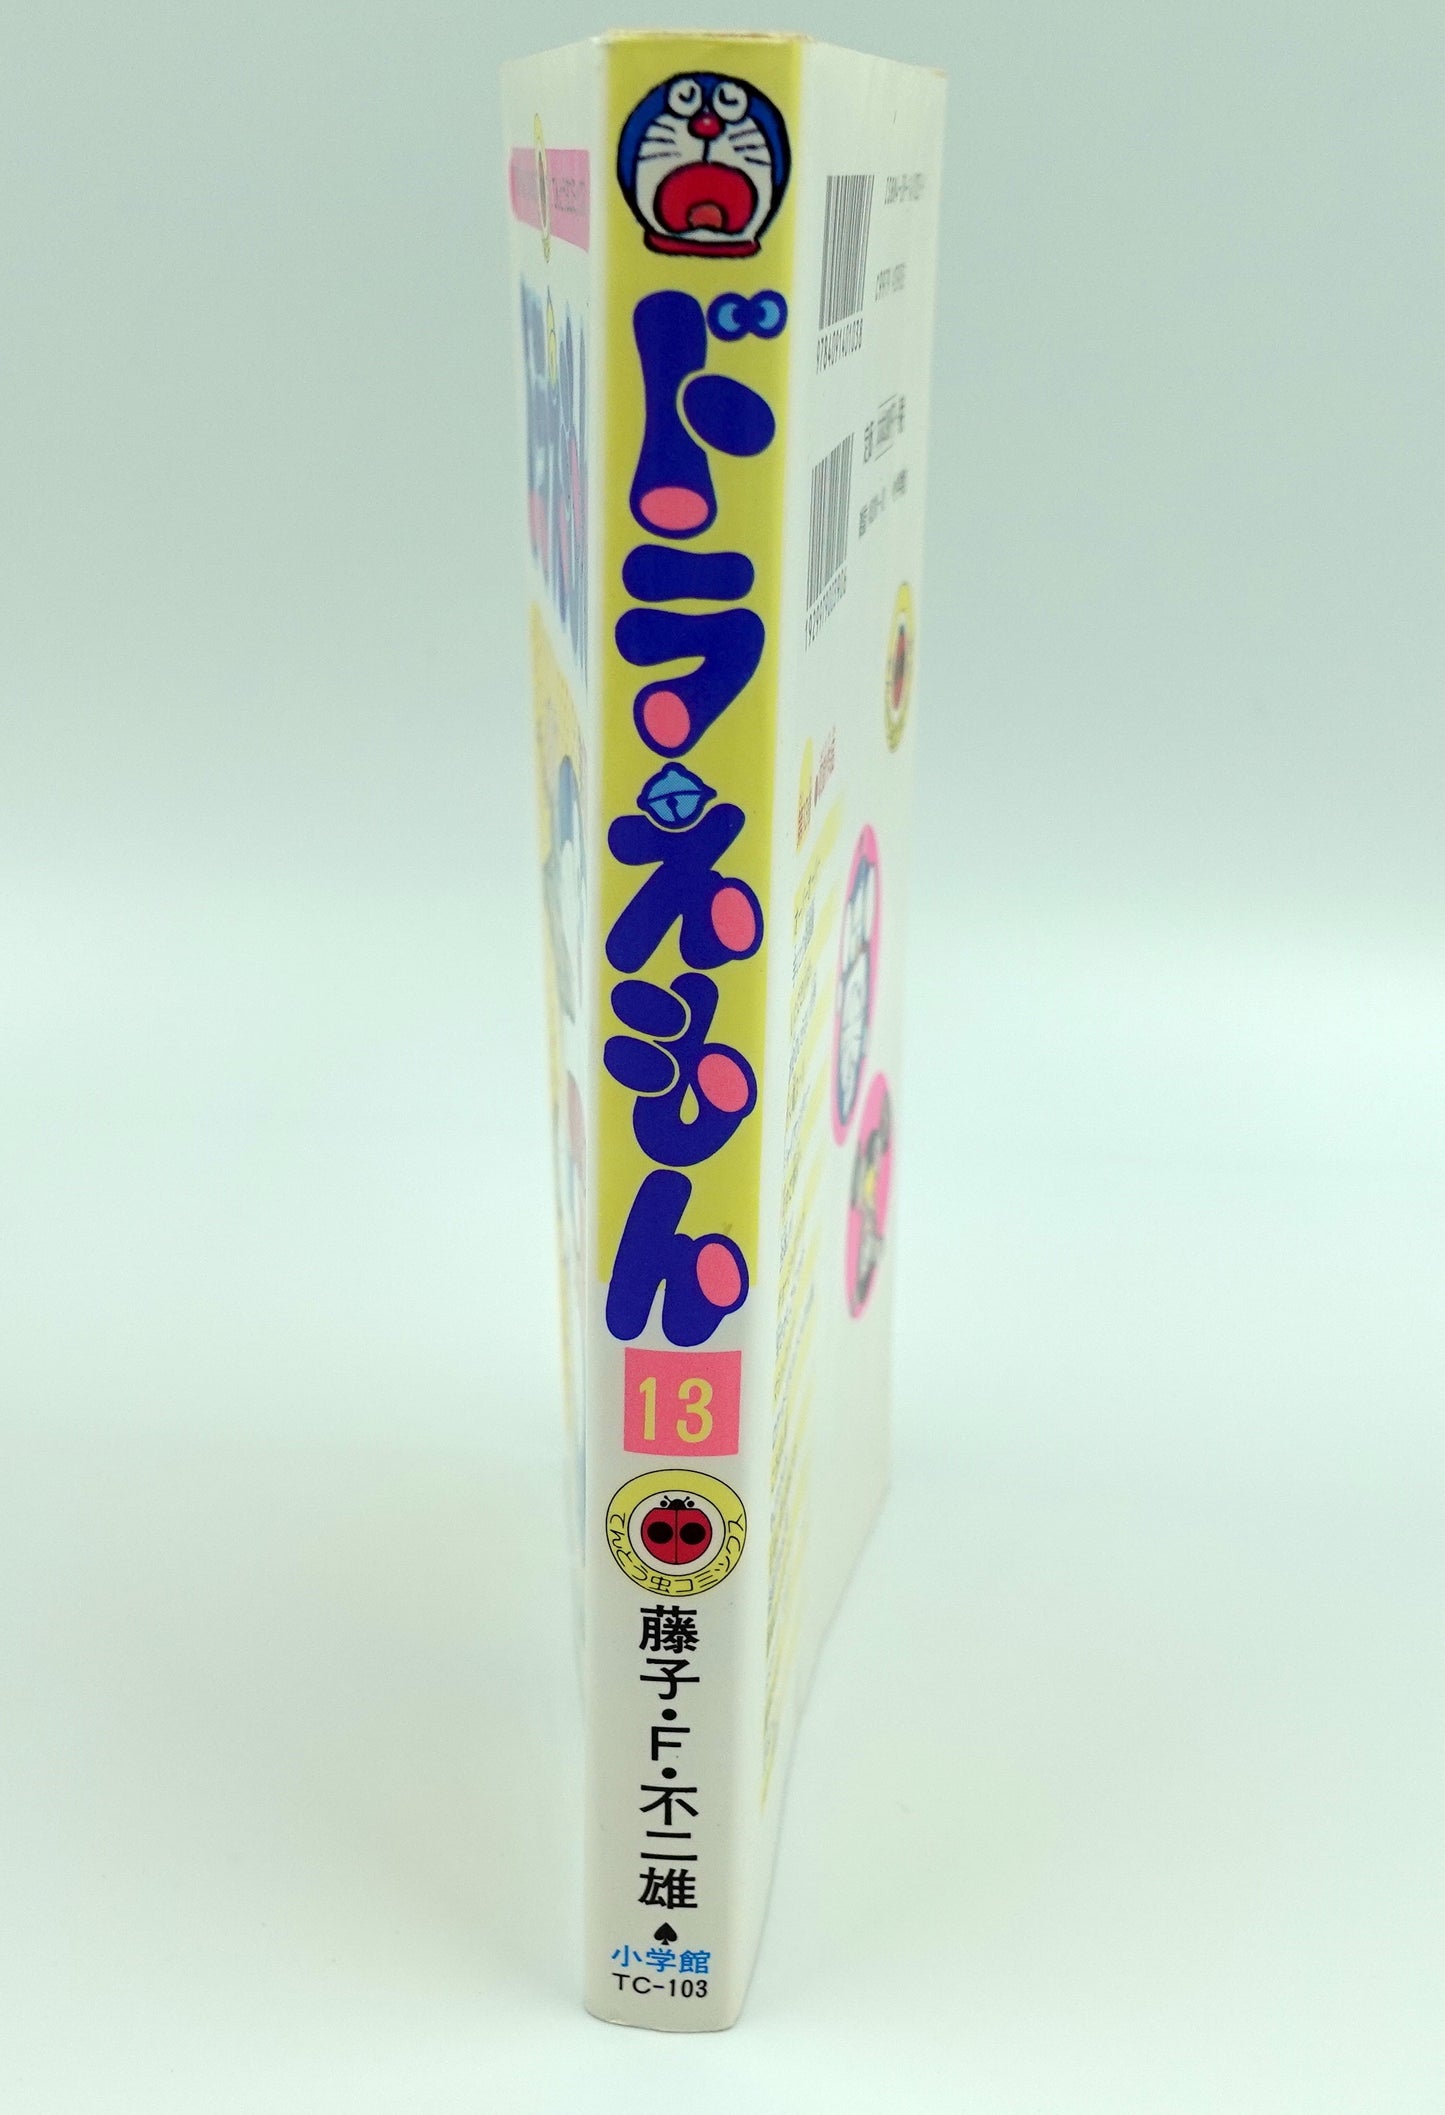 Doraemon Vol.13- Official Japanese Edition